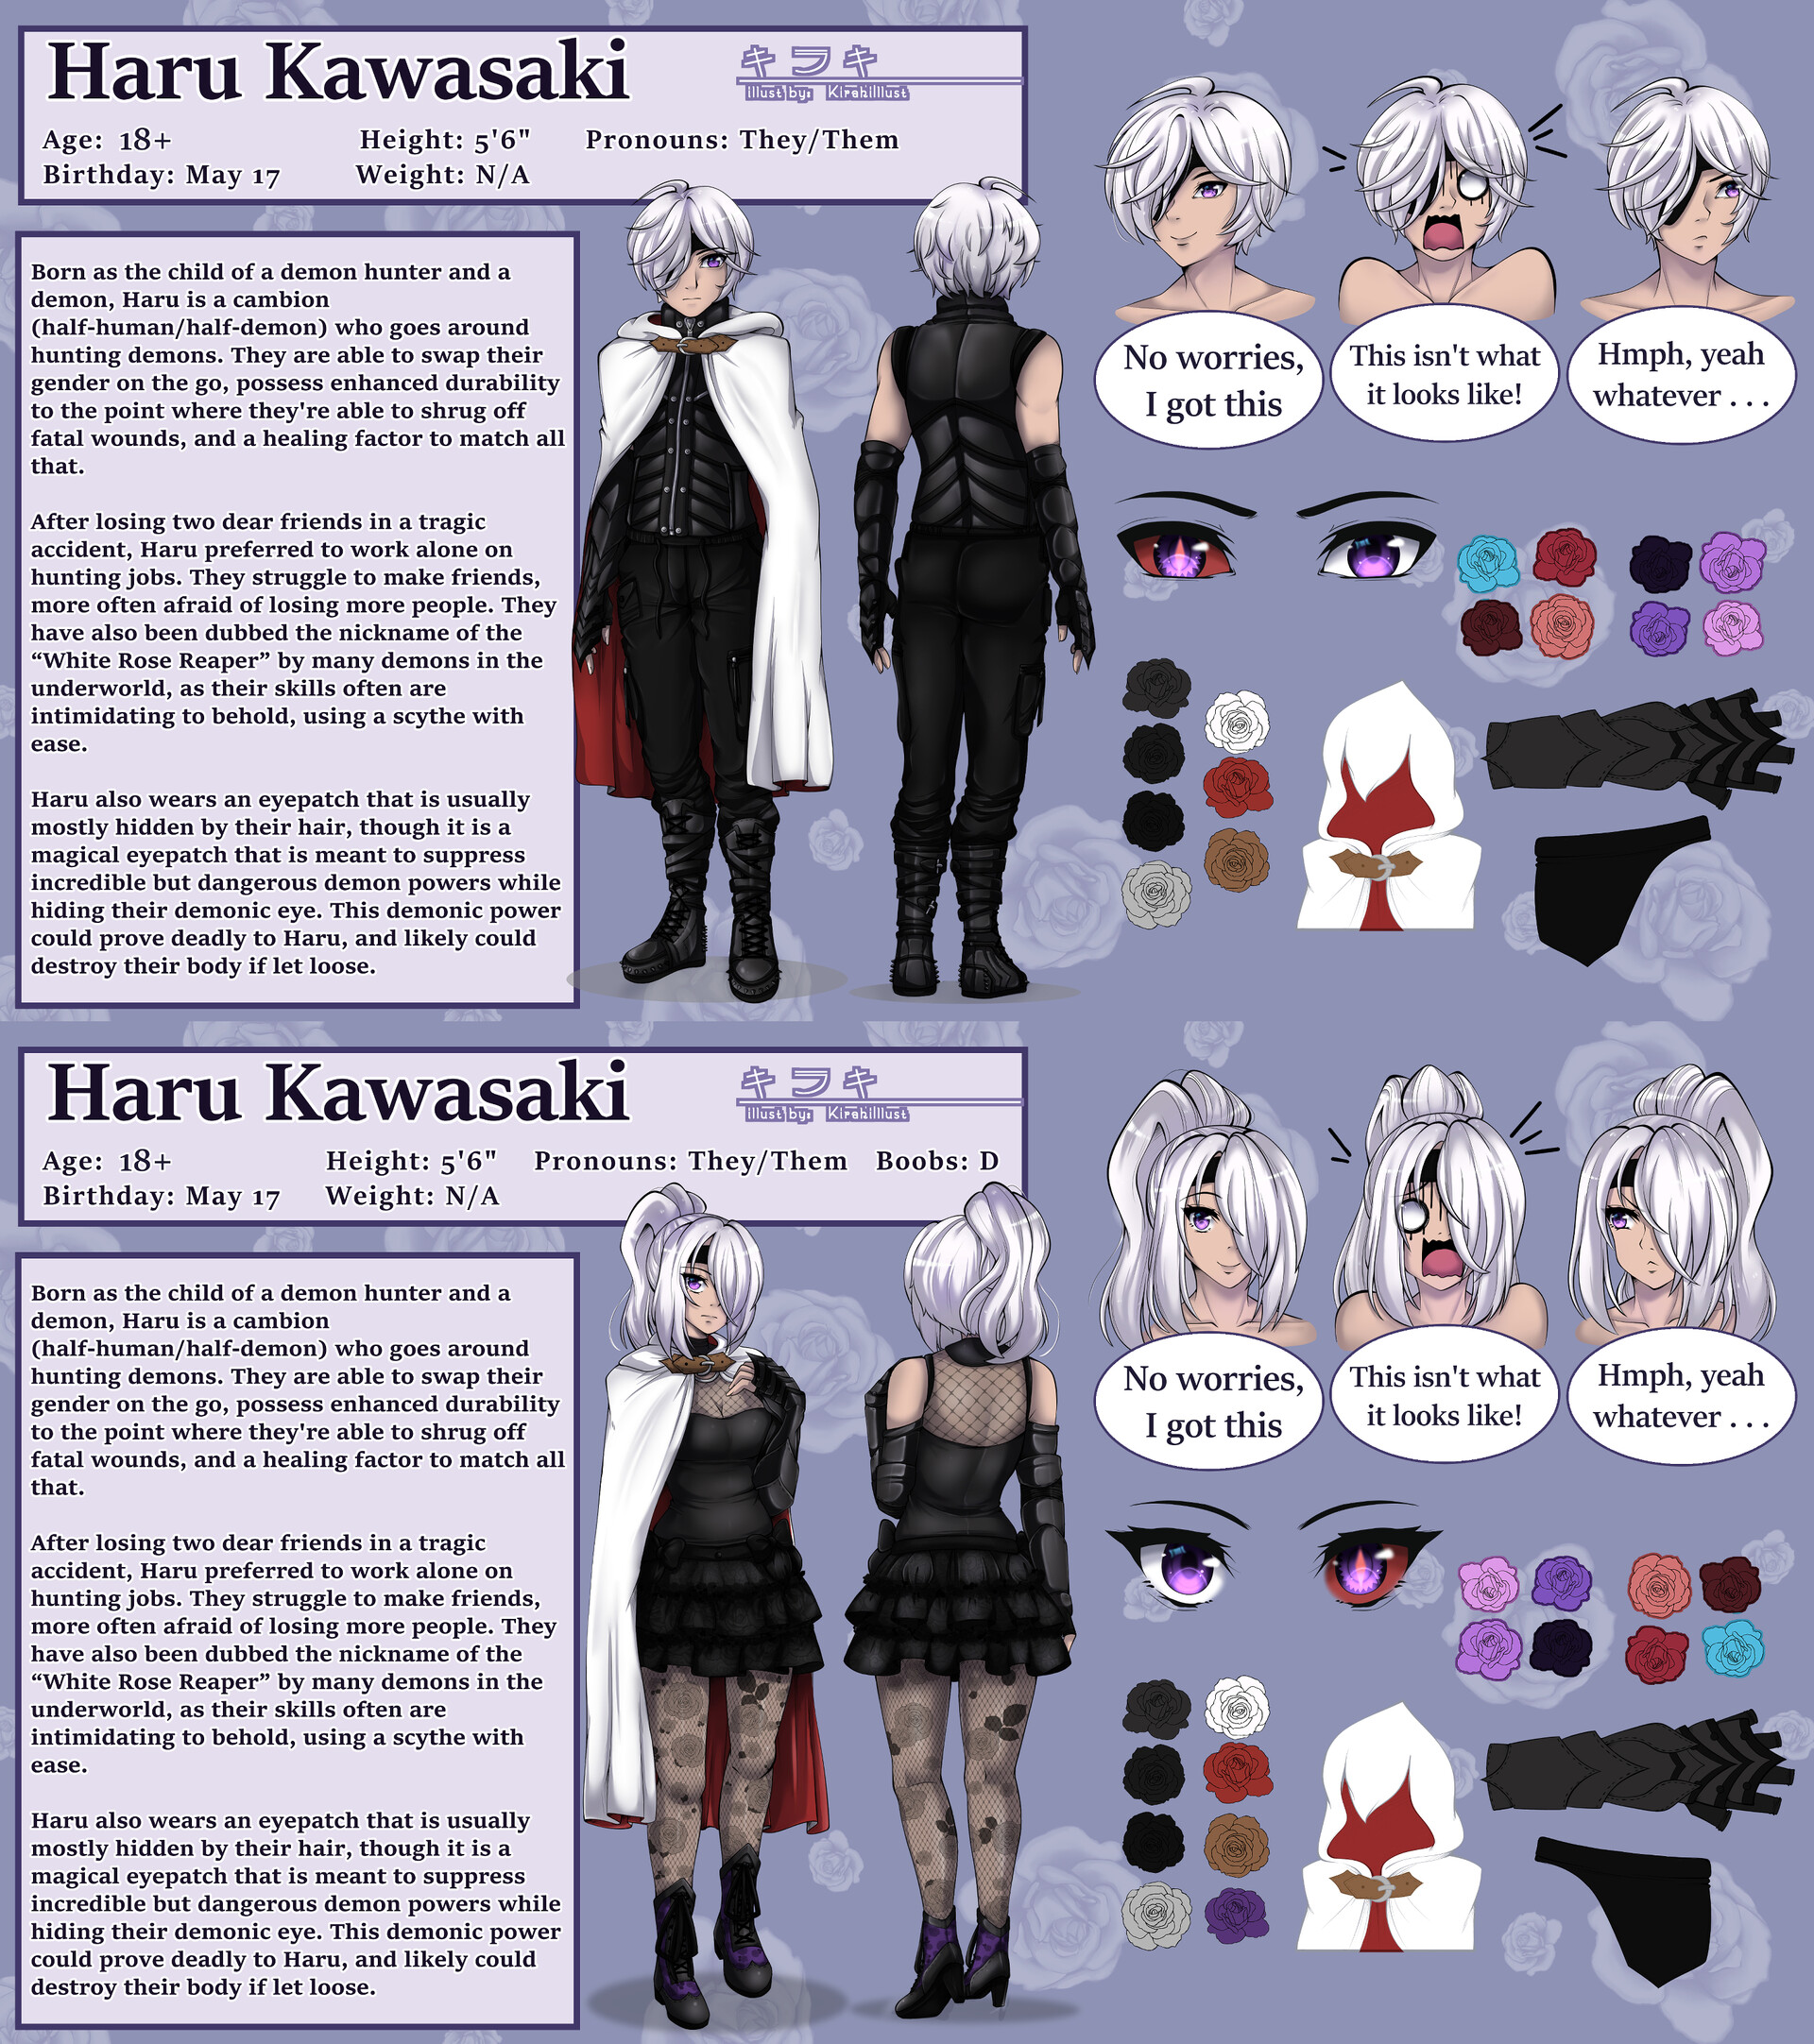 ArtStation - Haru Kawasaki | Reference Sheet